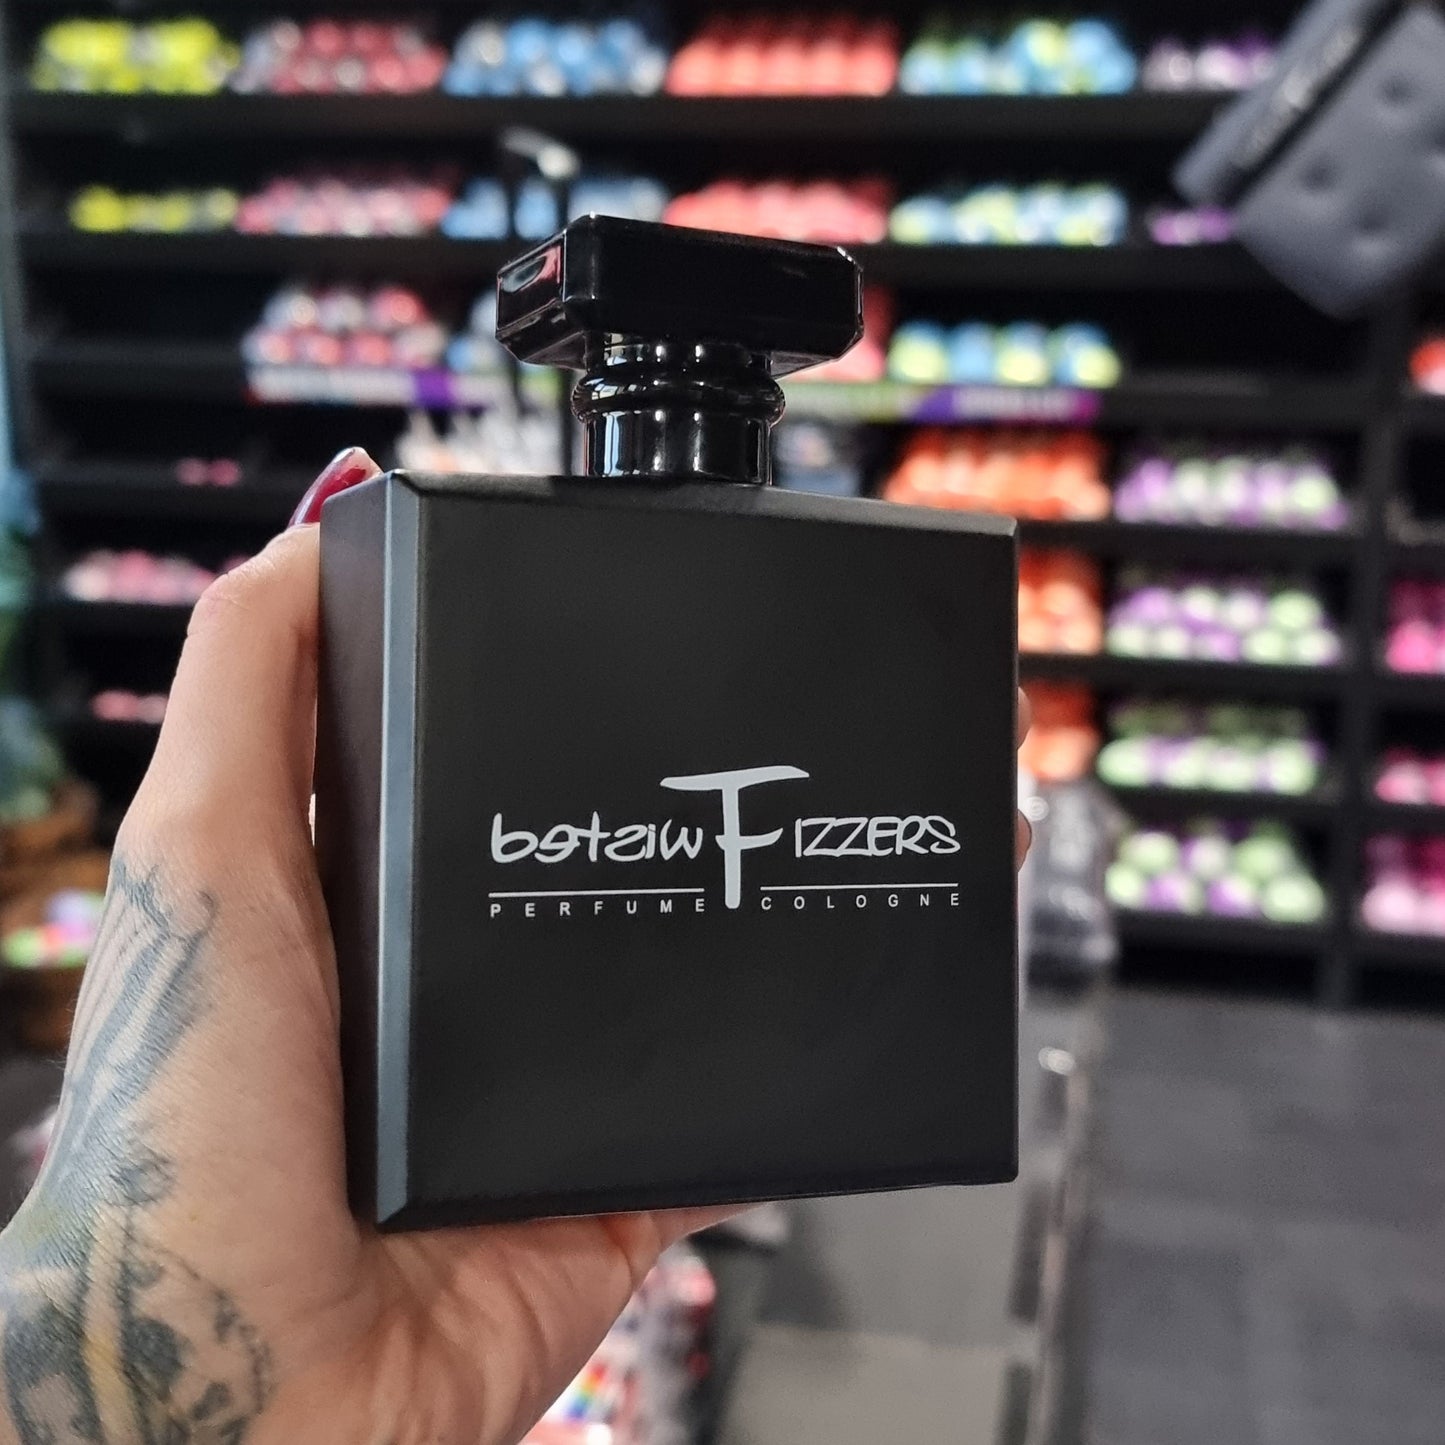 Body Perfume/Cologne - 100ml spray bottle